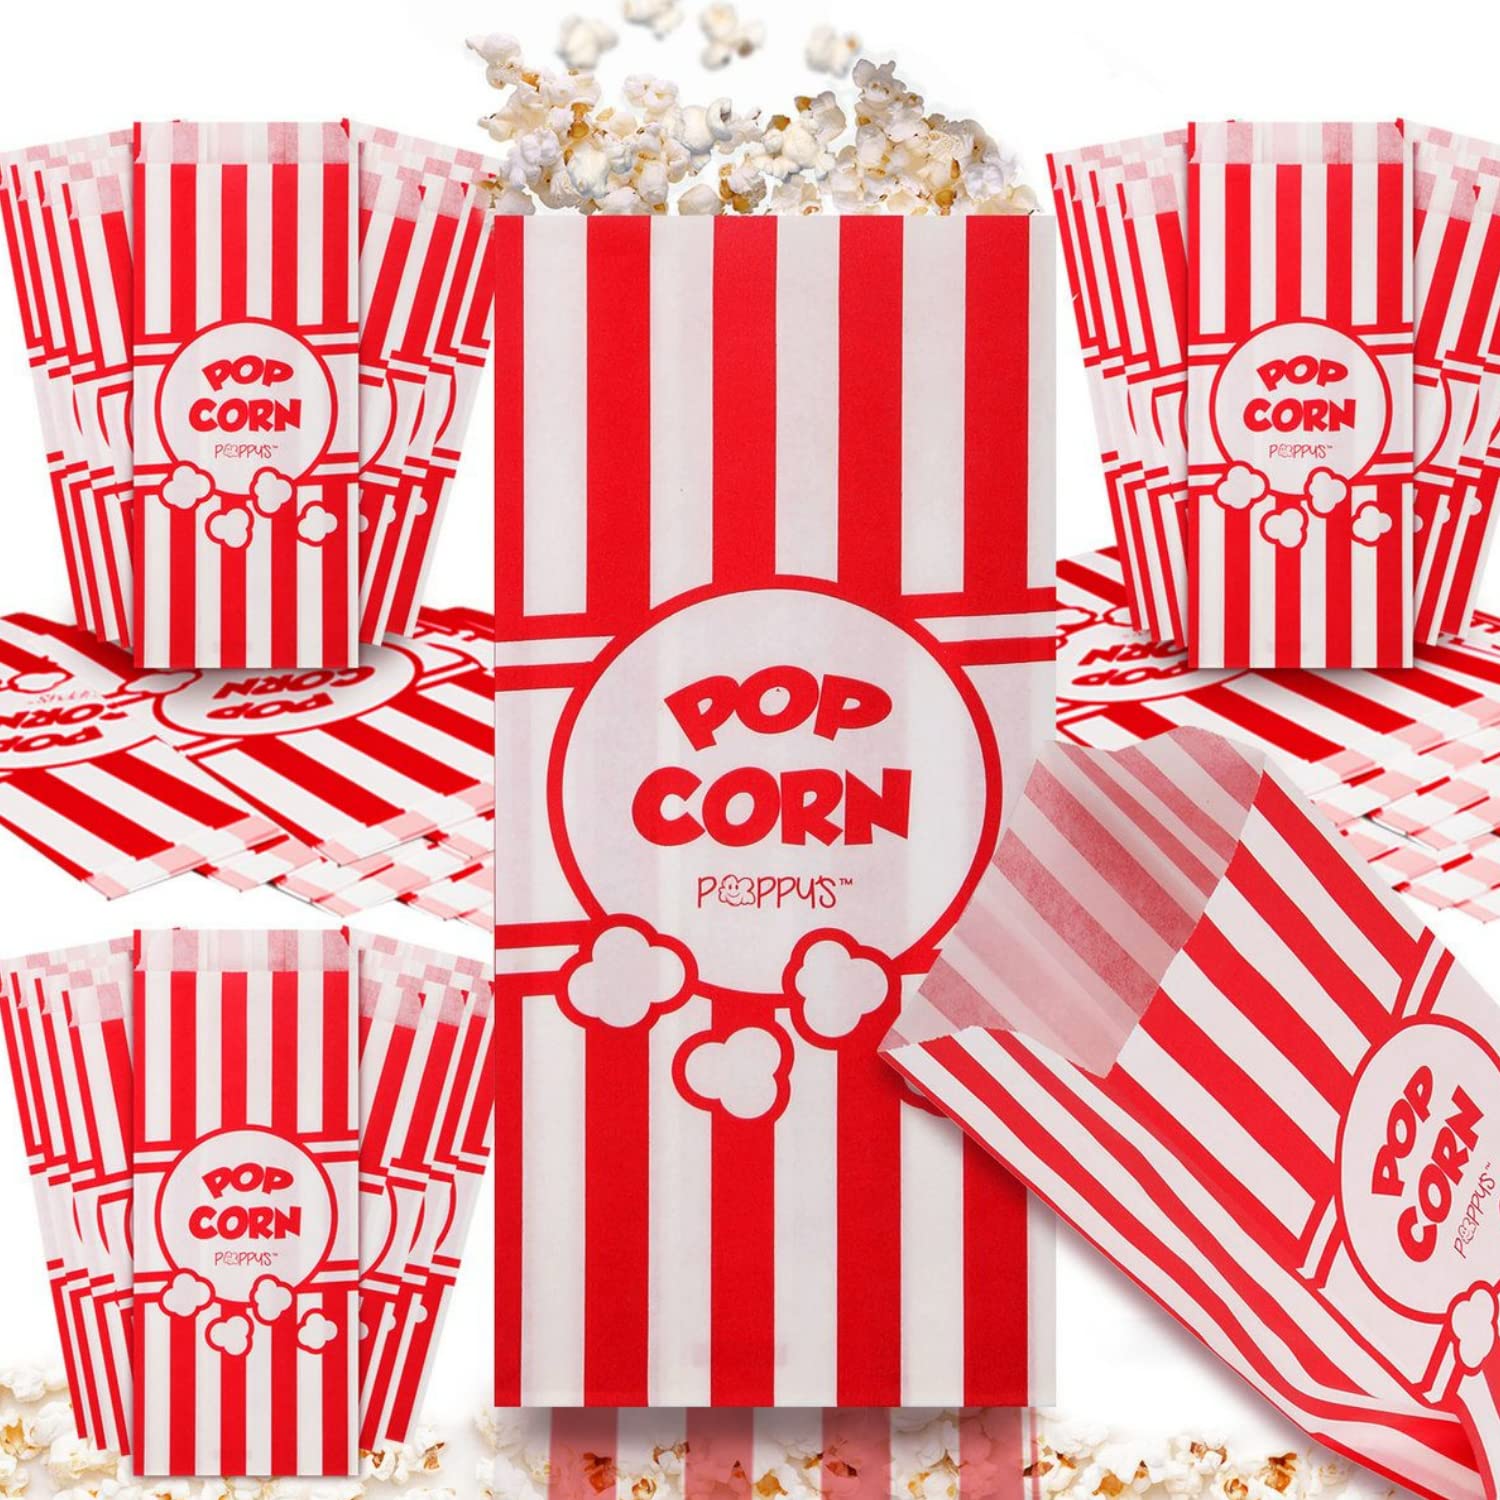 Poppy's Paper Popcorn Bags - 200 1oz Concession-Grade Bags, Popcorn Machine Accessories for Popcorn Bars, Movie Nights, Concessi